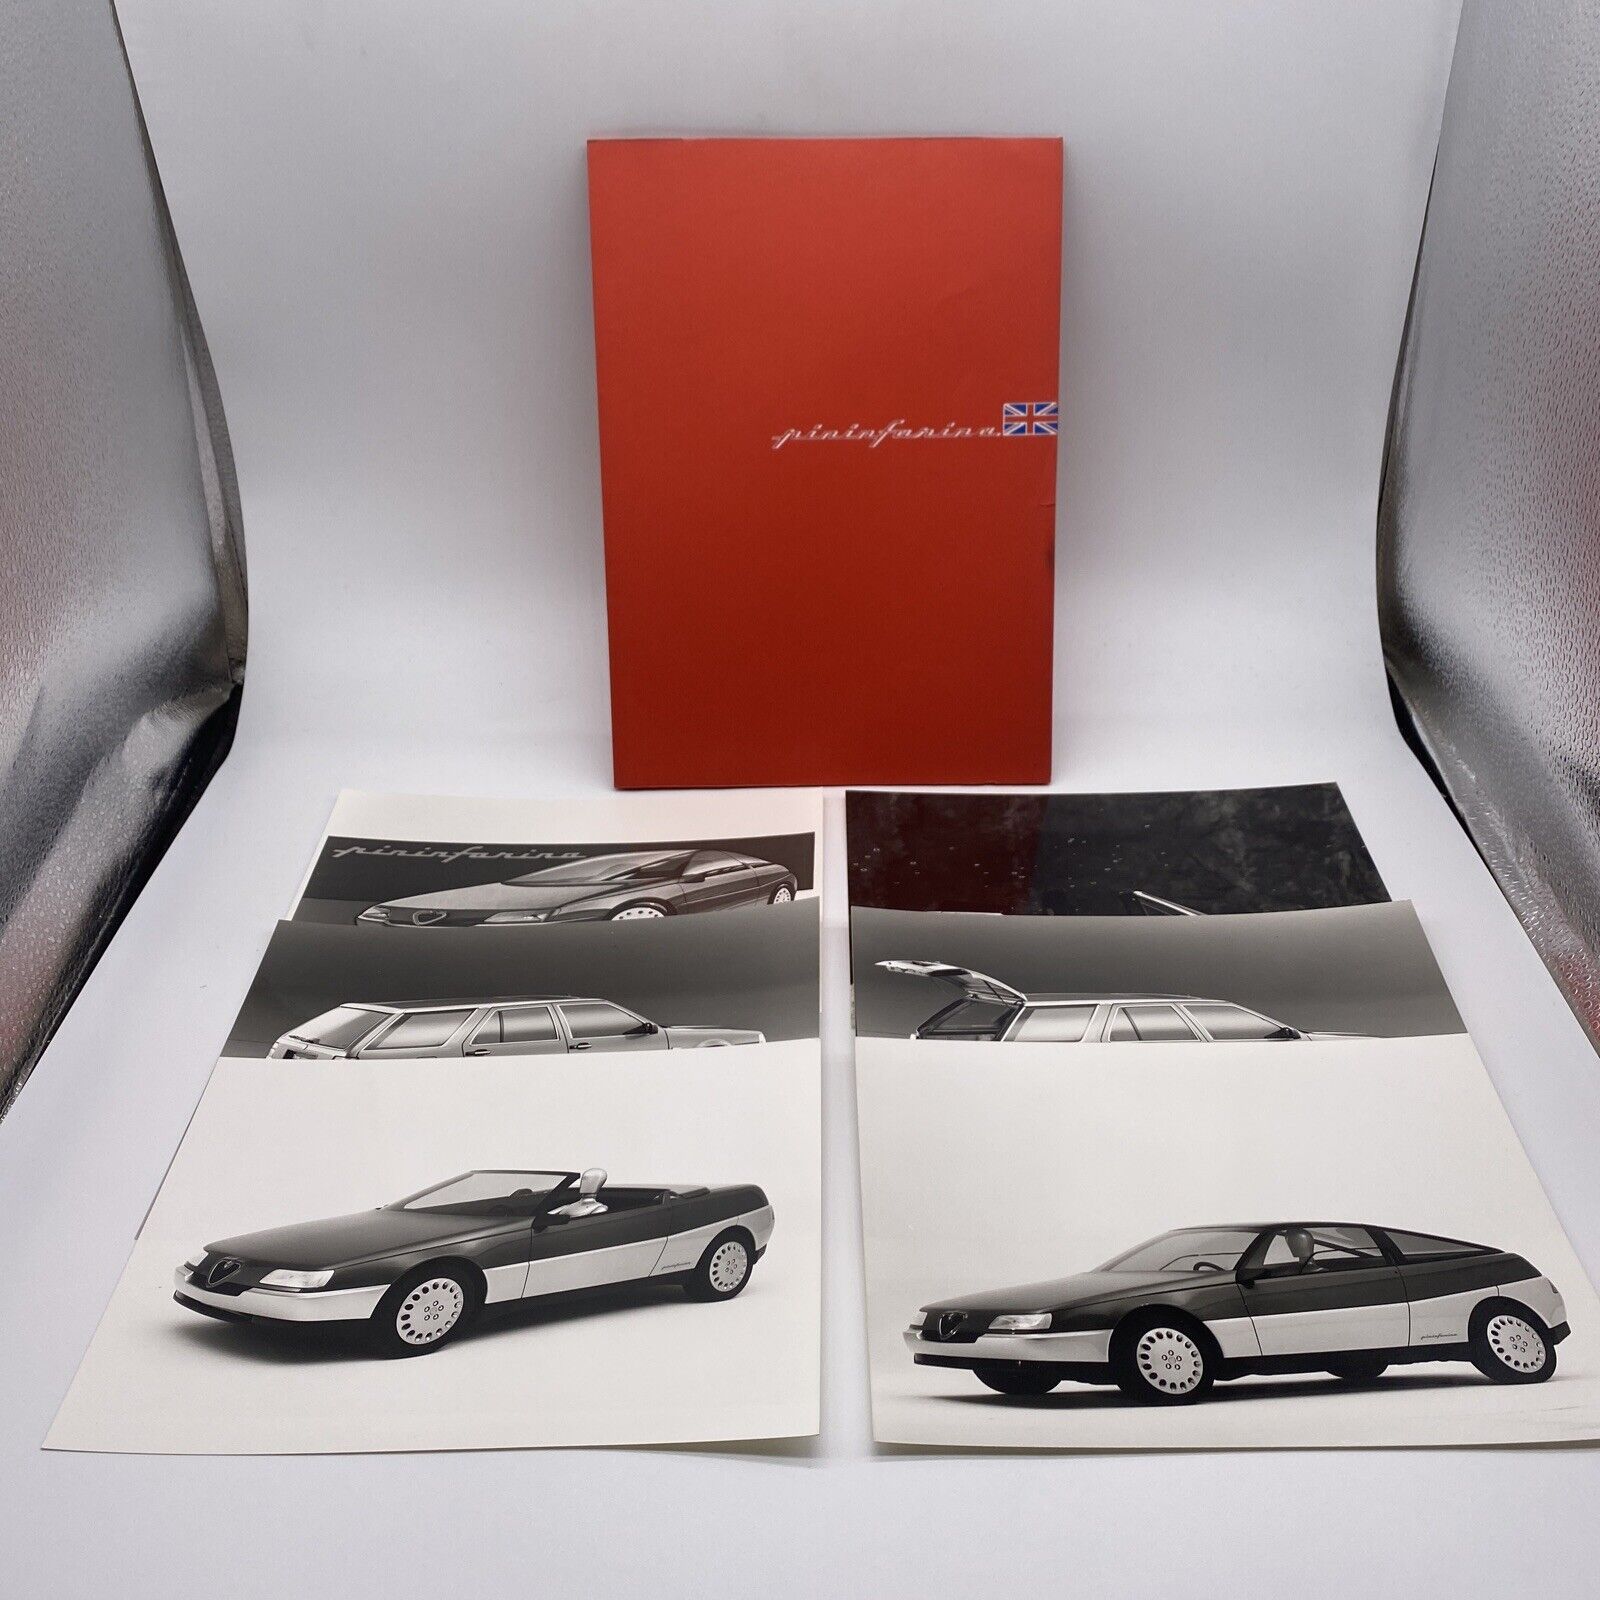 1986 Pininfarina Turin Motor Show Press Kit Ferrari Alfa Romeo Lancia Peugeot